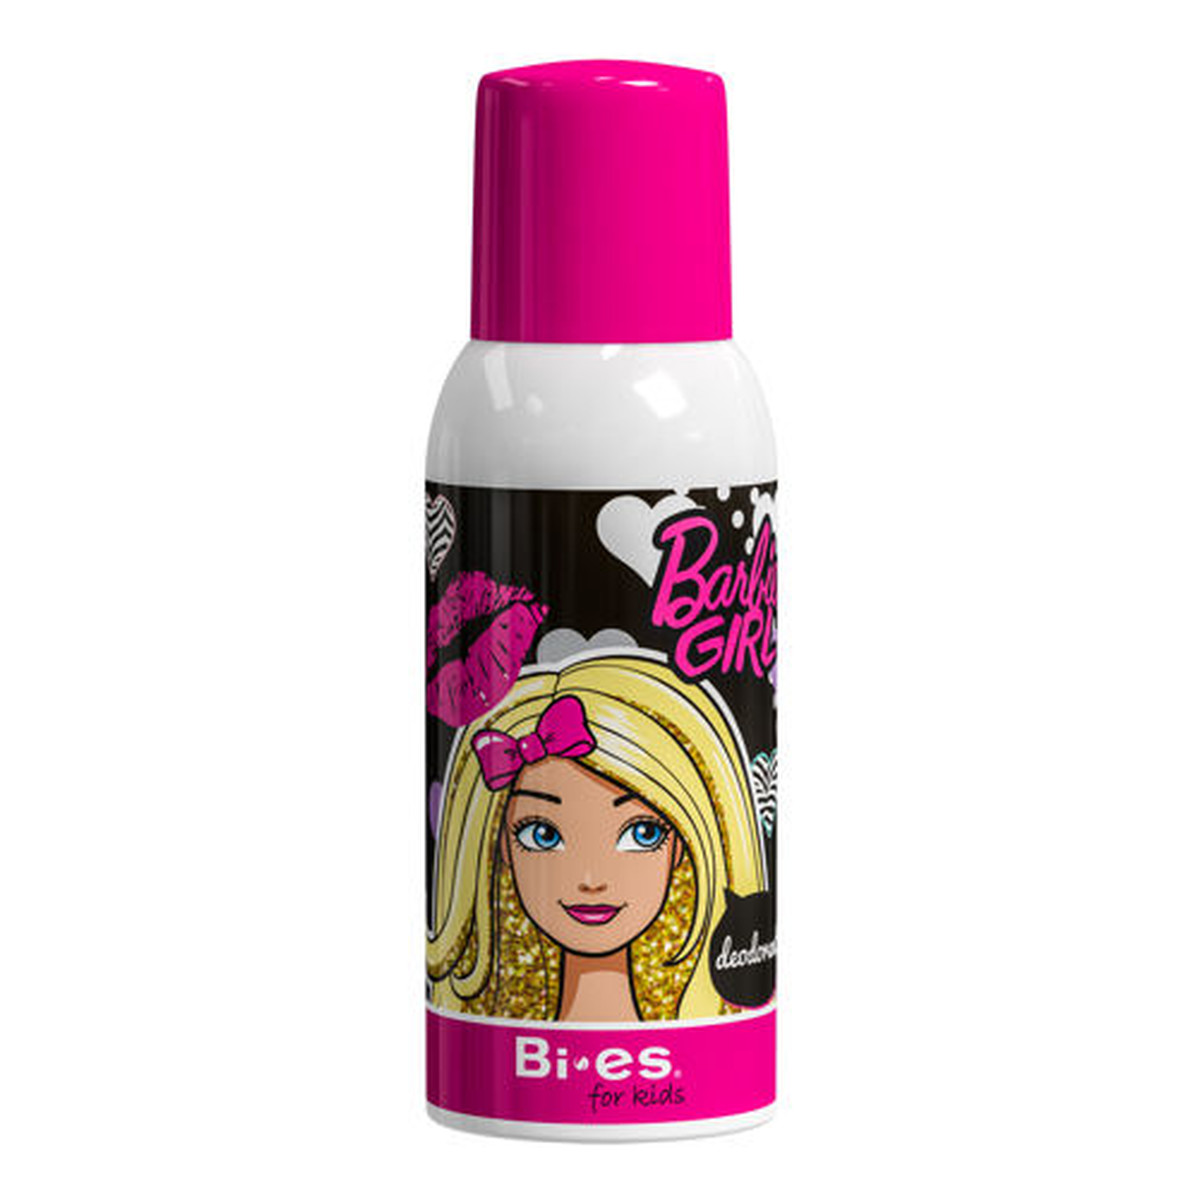 Bi-es Disney Barbie Girl Dezodorant spray 100ml